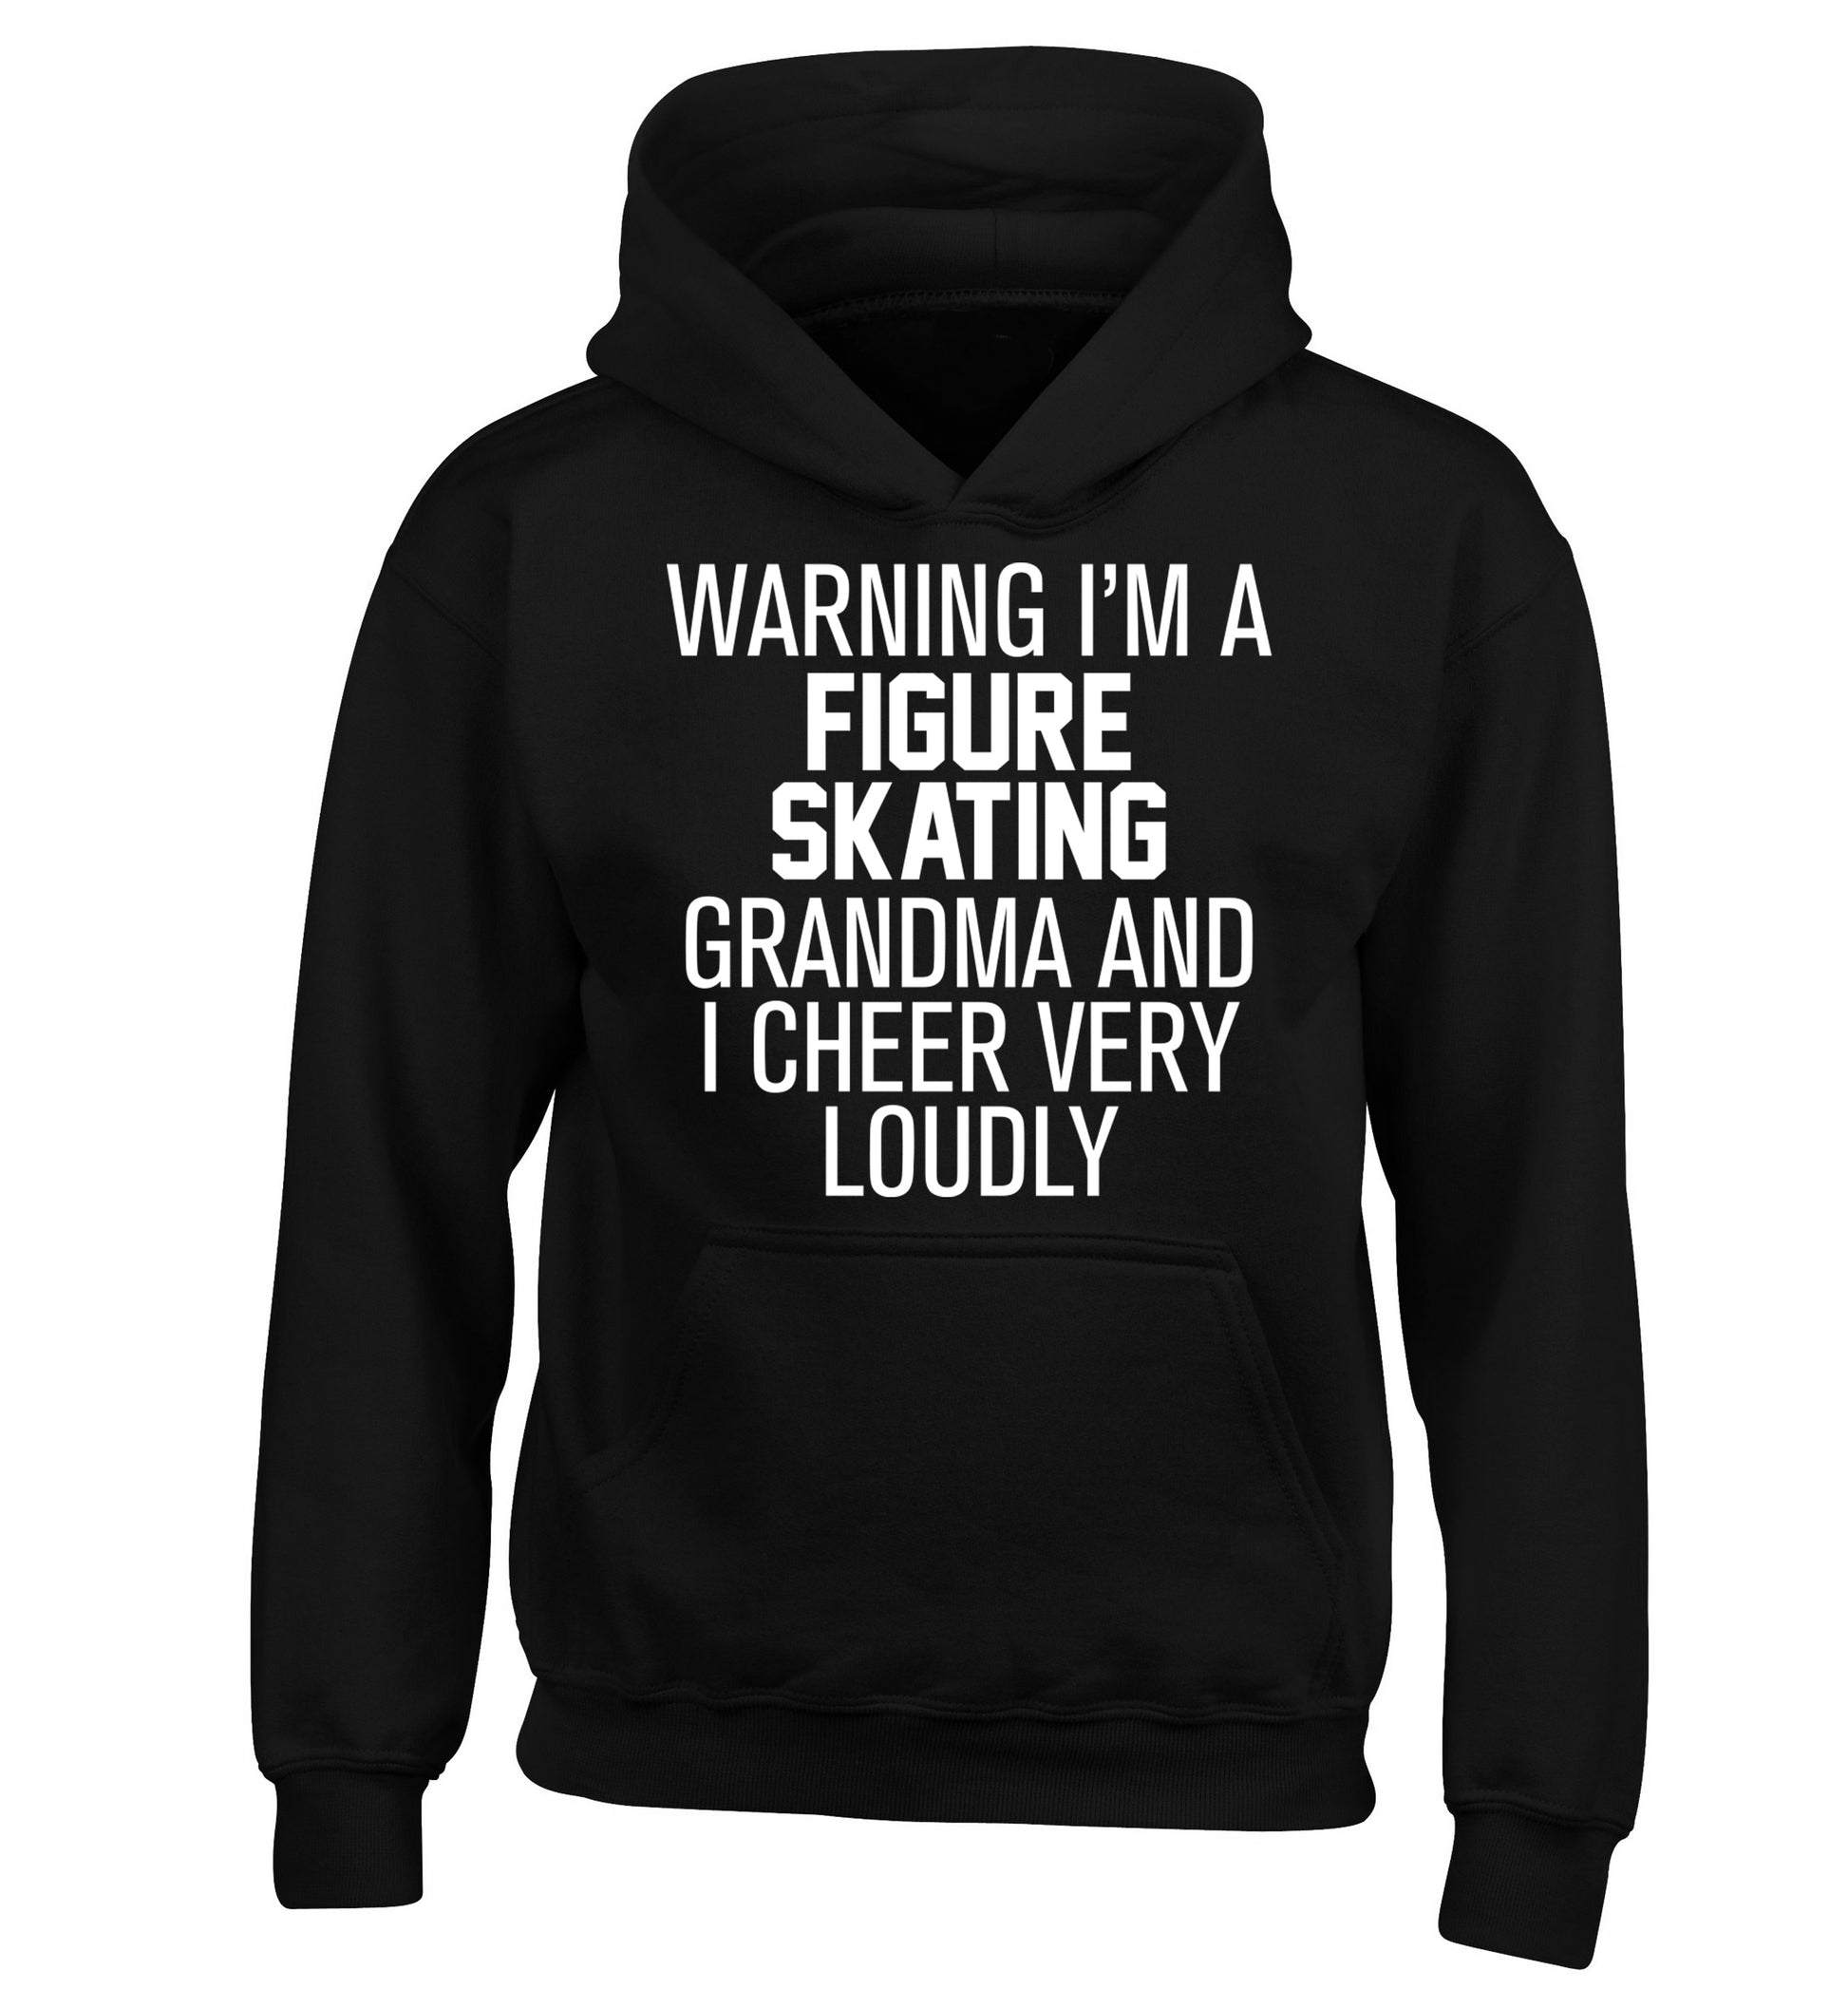 Warning I'm a figure skating grandma and I cheer very loudly children's black hoodie 12-14 Years